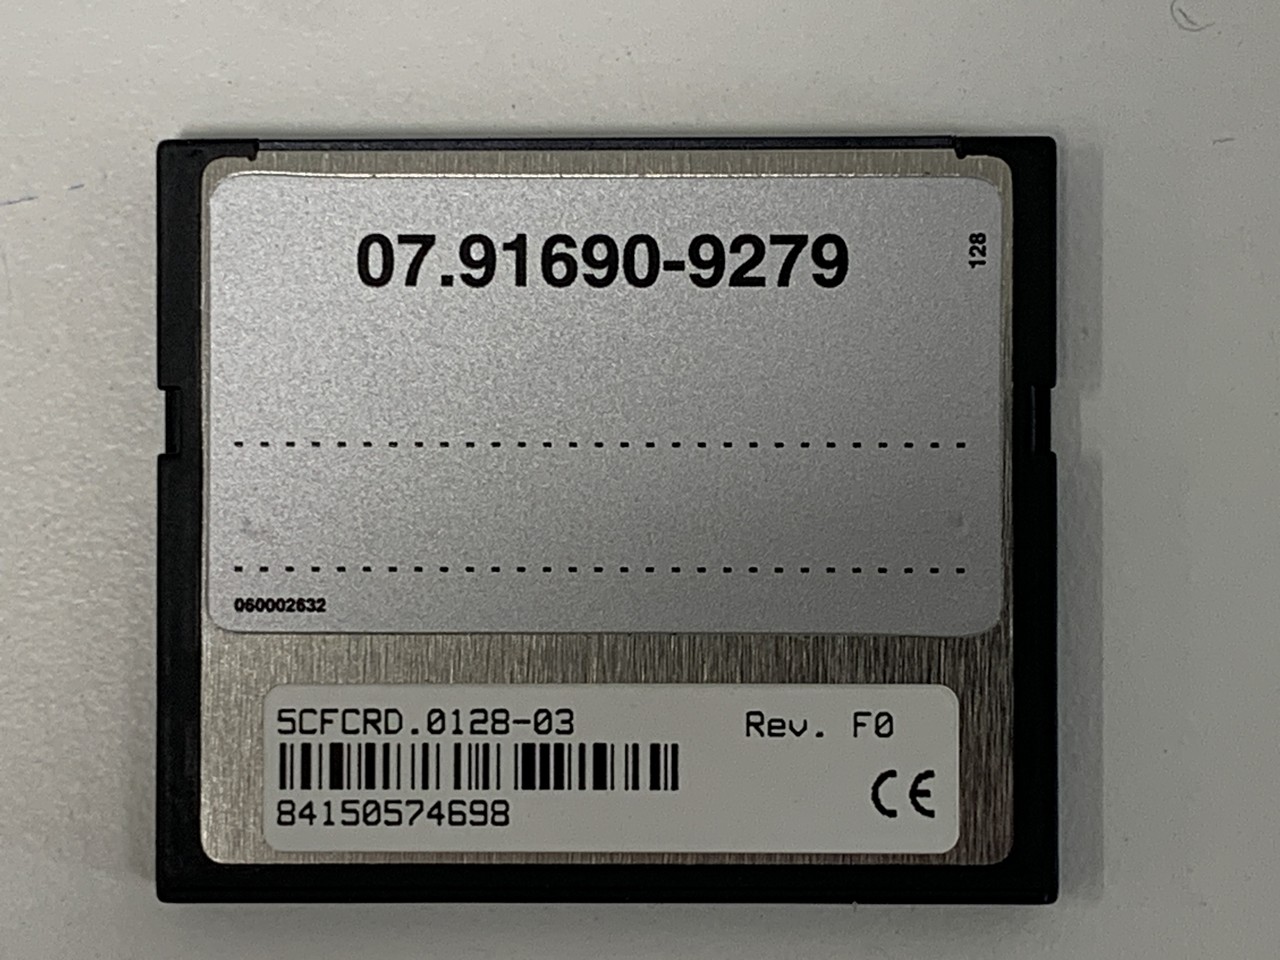 GWS Parts - SCFCRD.0128-03 Manroland compact flash card for MAN ...